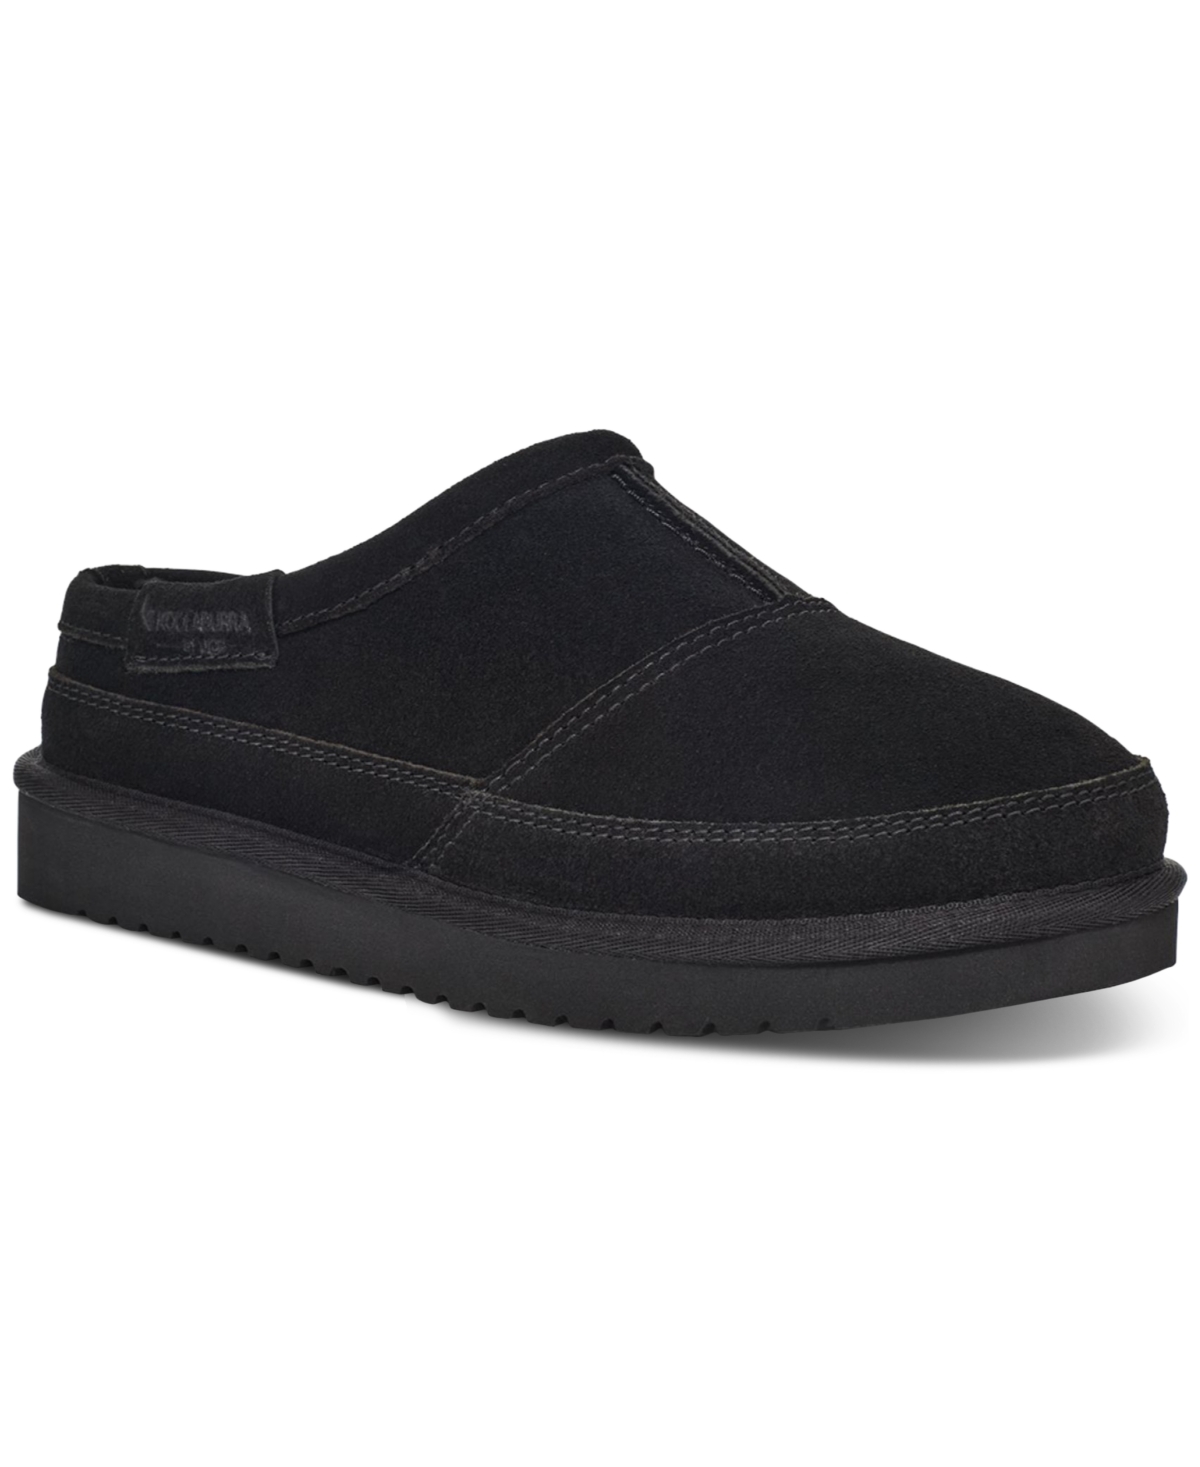 Koolaburra By Ugg Women's Graisen Round-Toe Slip-On Cozy Slippers Women's Shoes